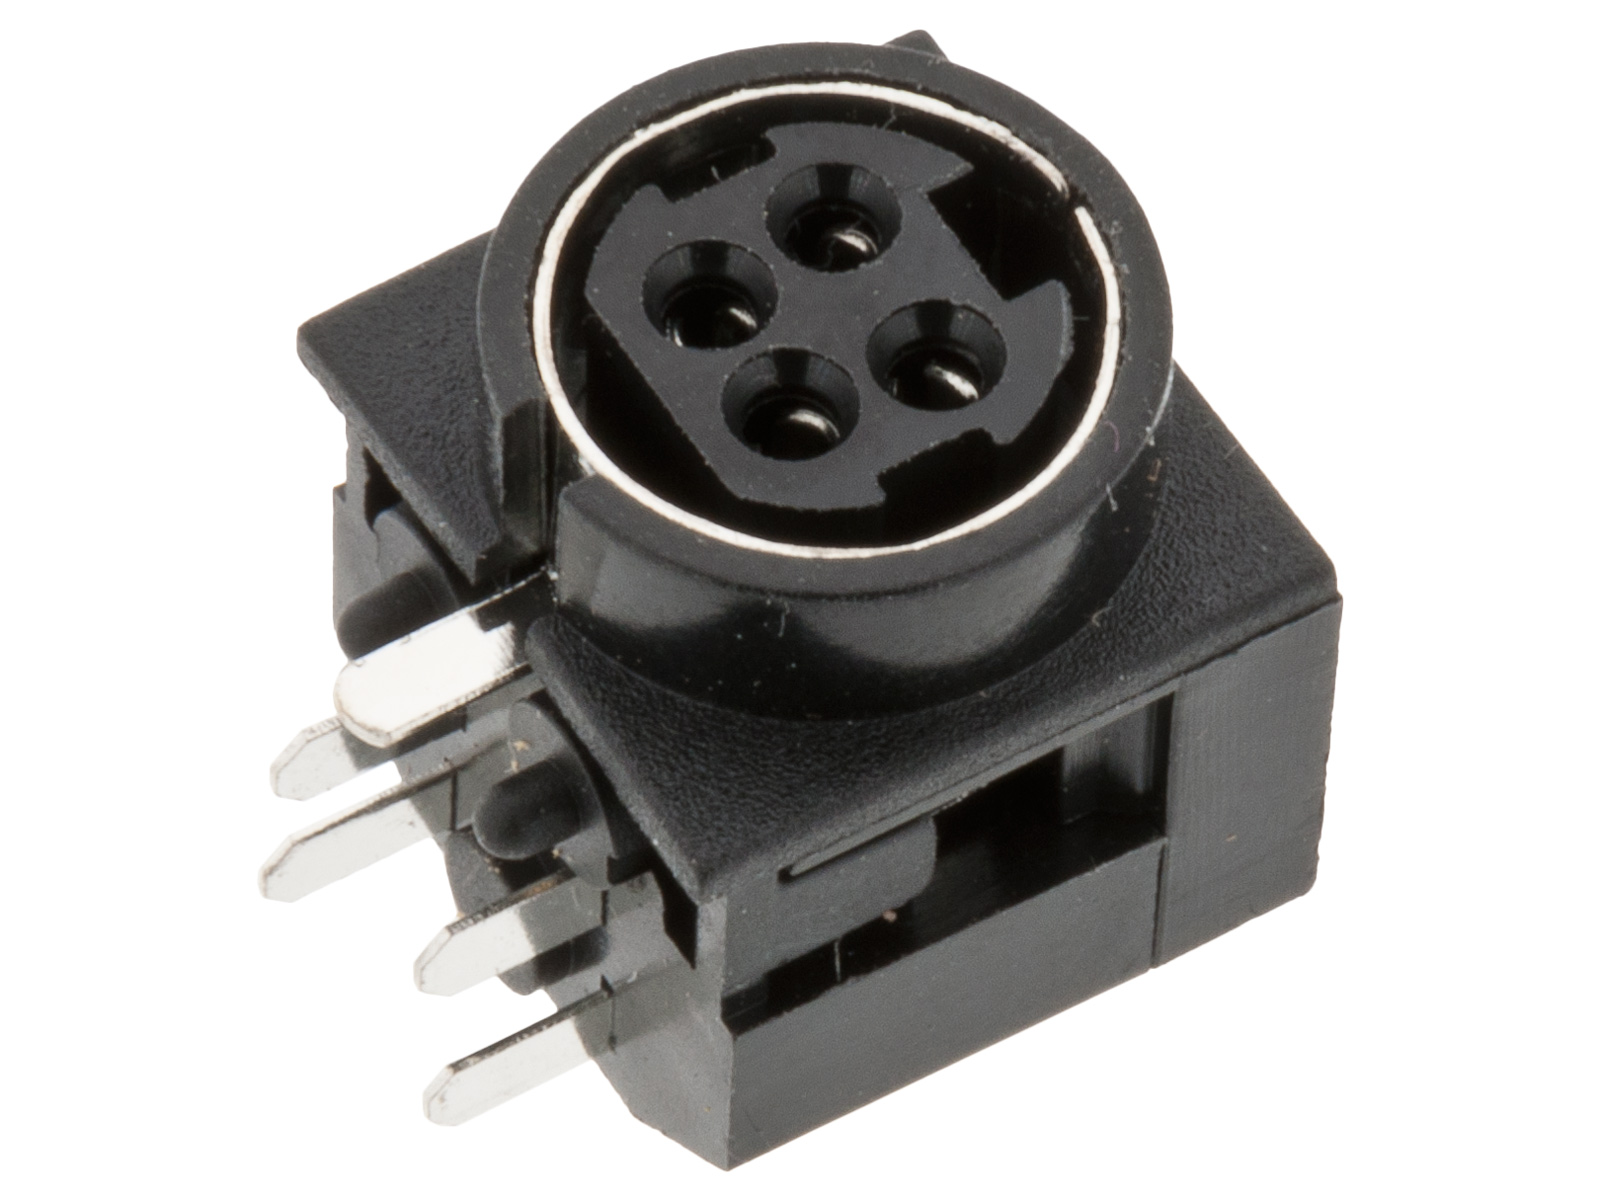 Power DIN 4-pol jack PCB @ electrokit